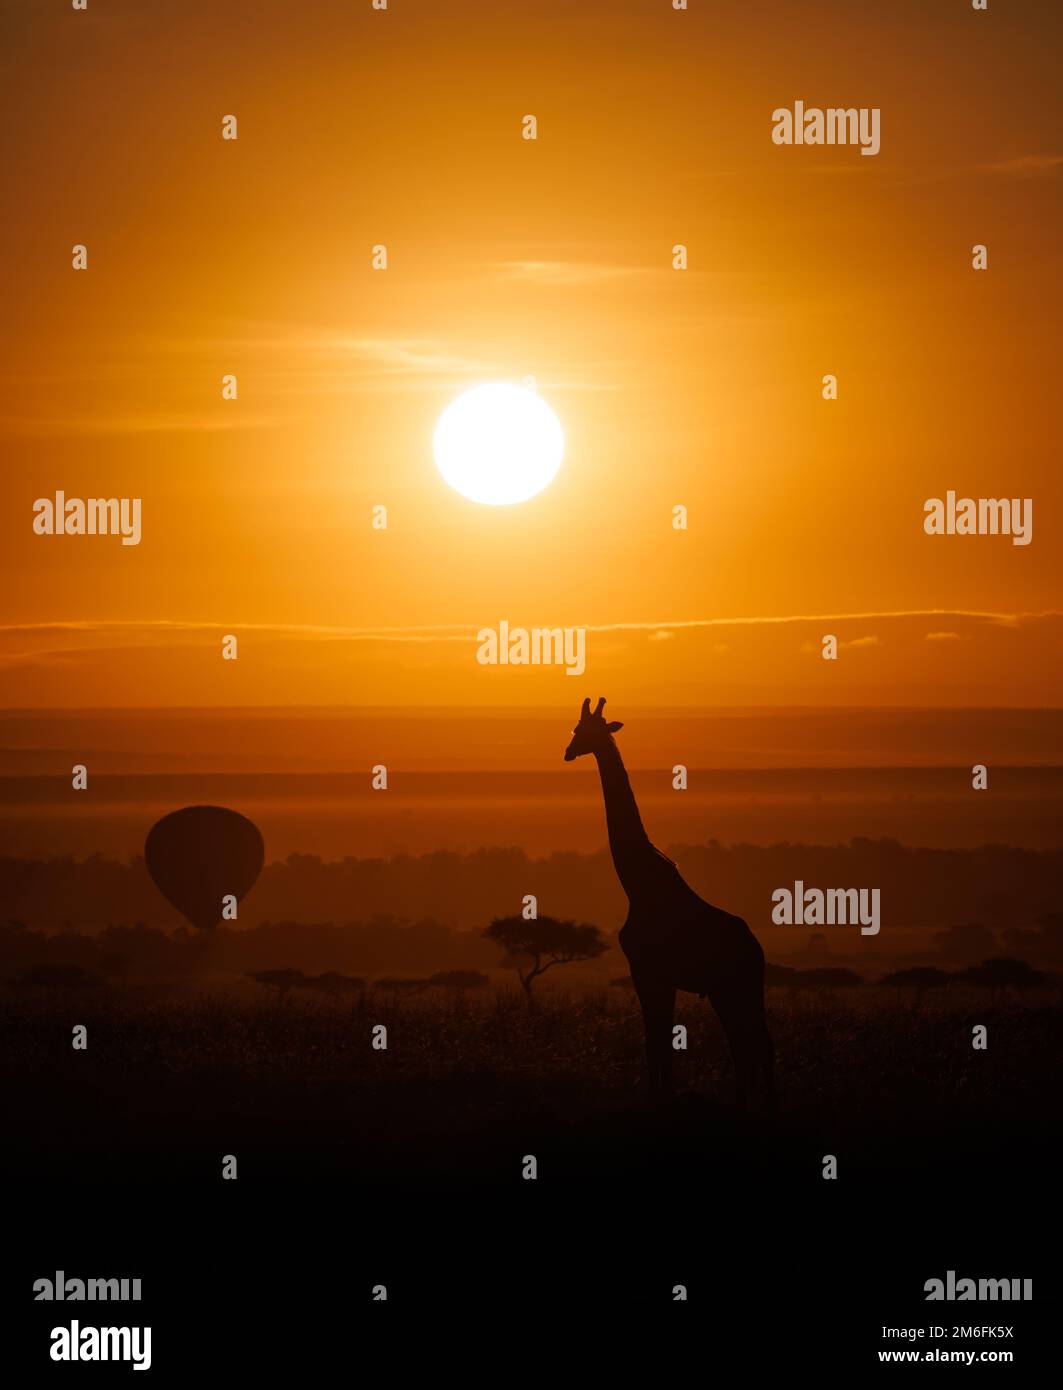 A giraffe on safari in Africa Stock Photo